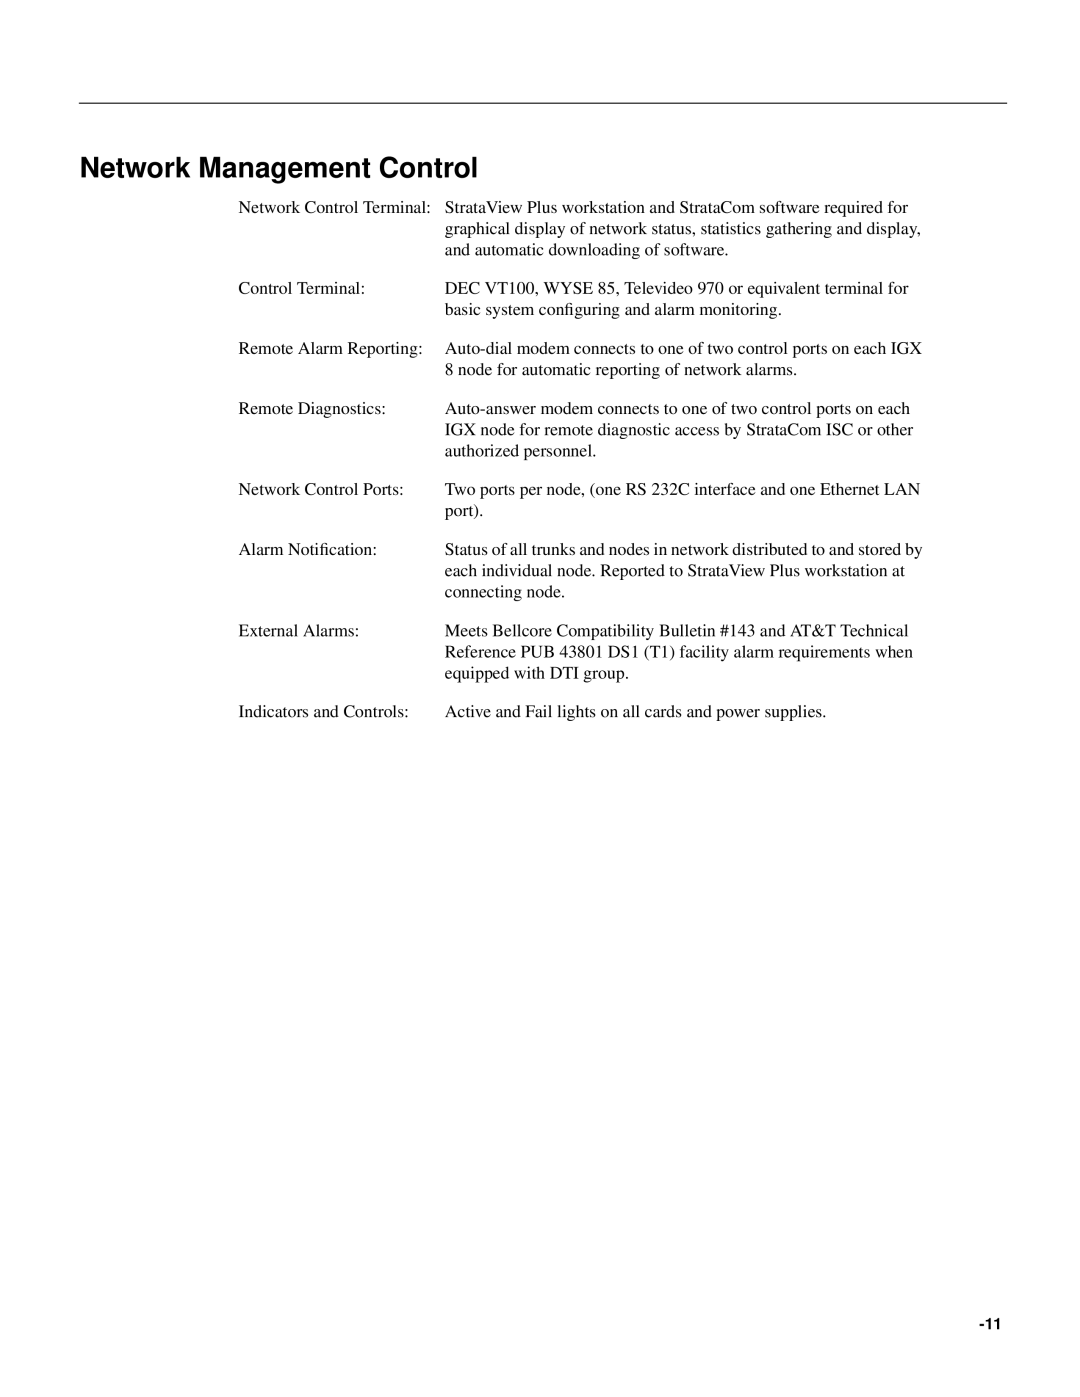 Cisco Systems IGX 8 appendix Network Management Control 